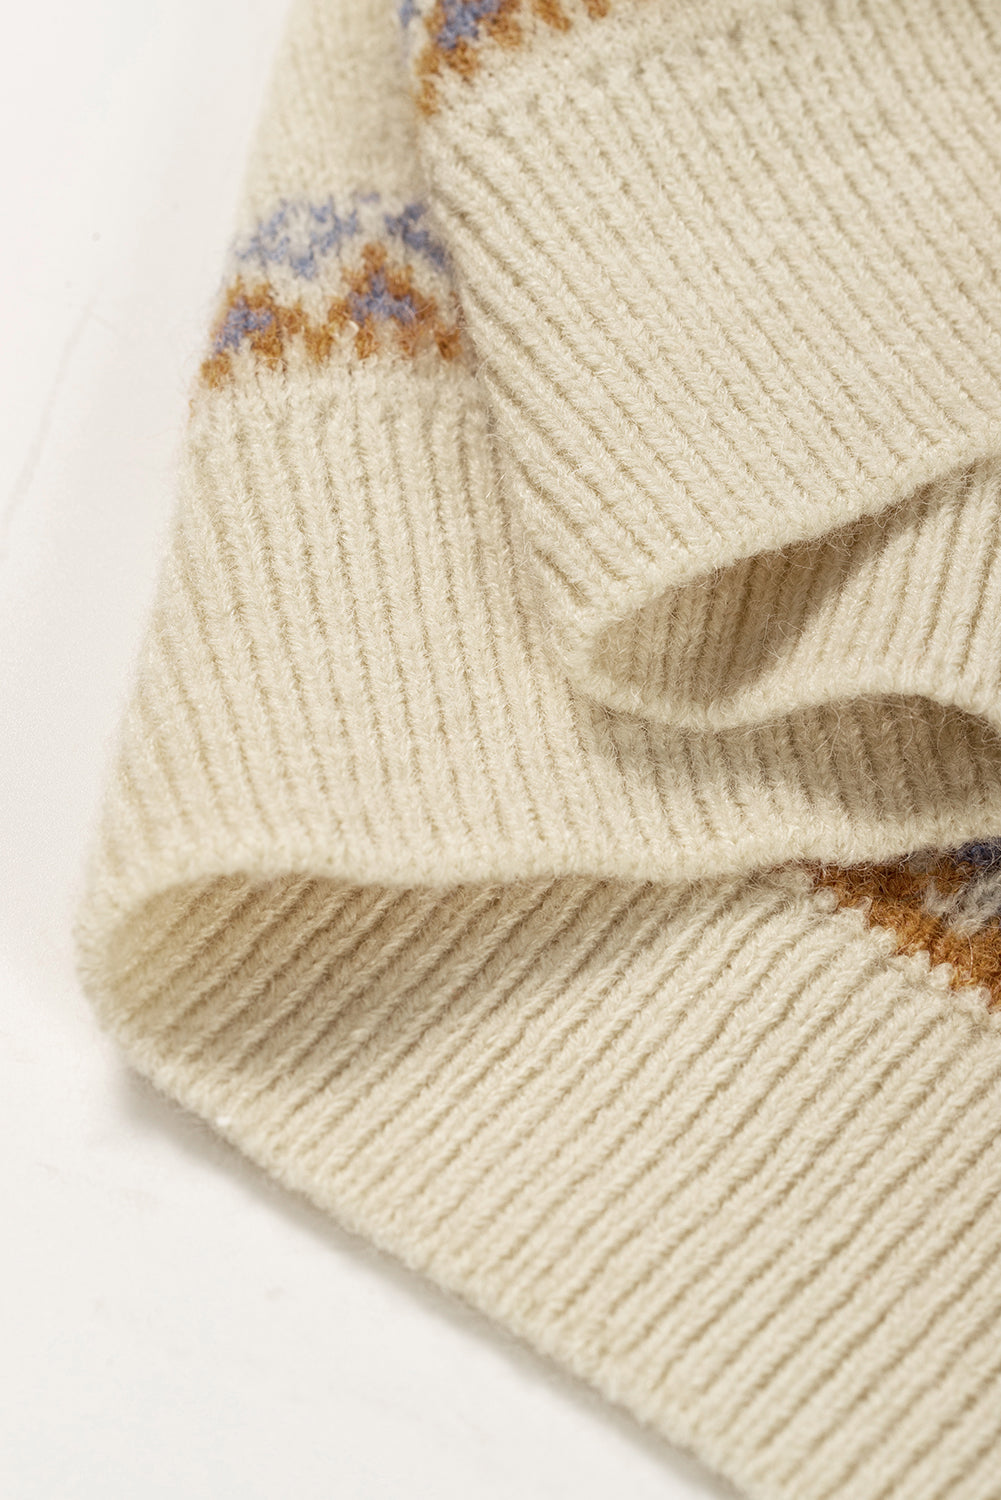 Multicolor Vintage Geometric Detail Round Neck Sweater